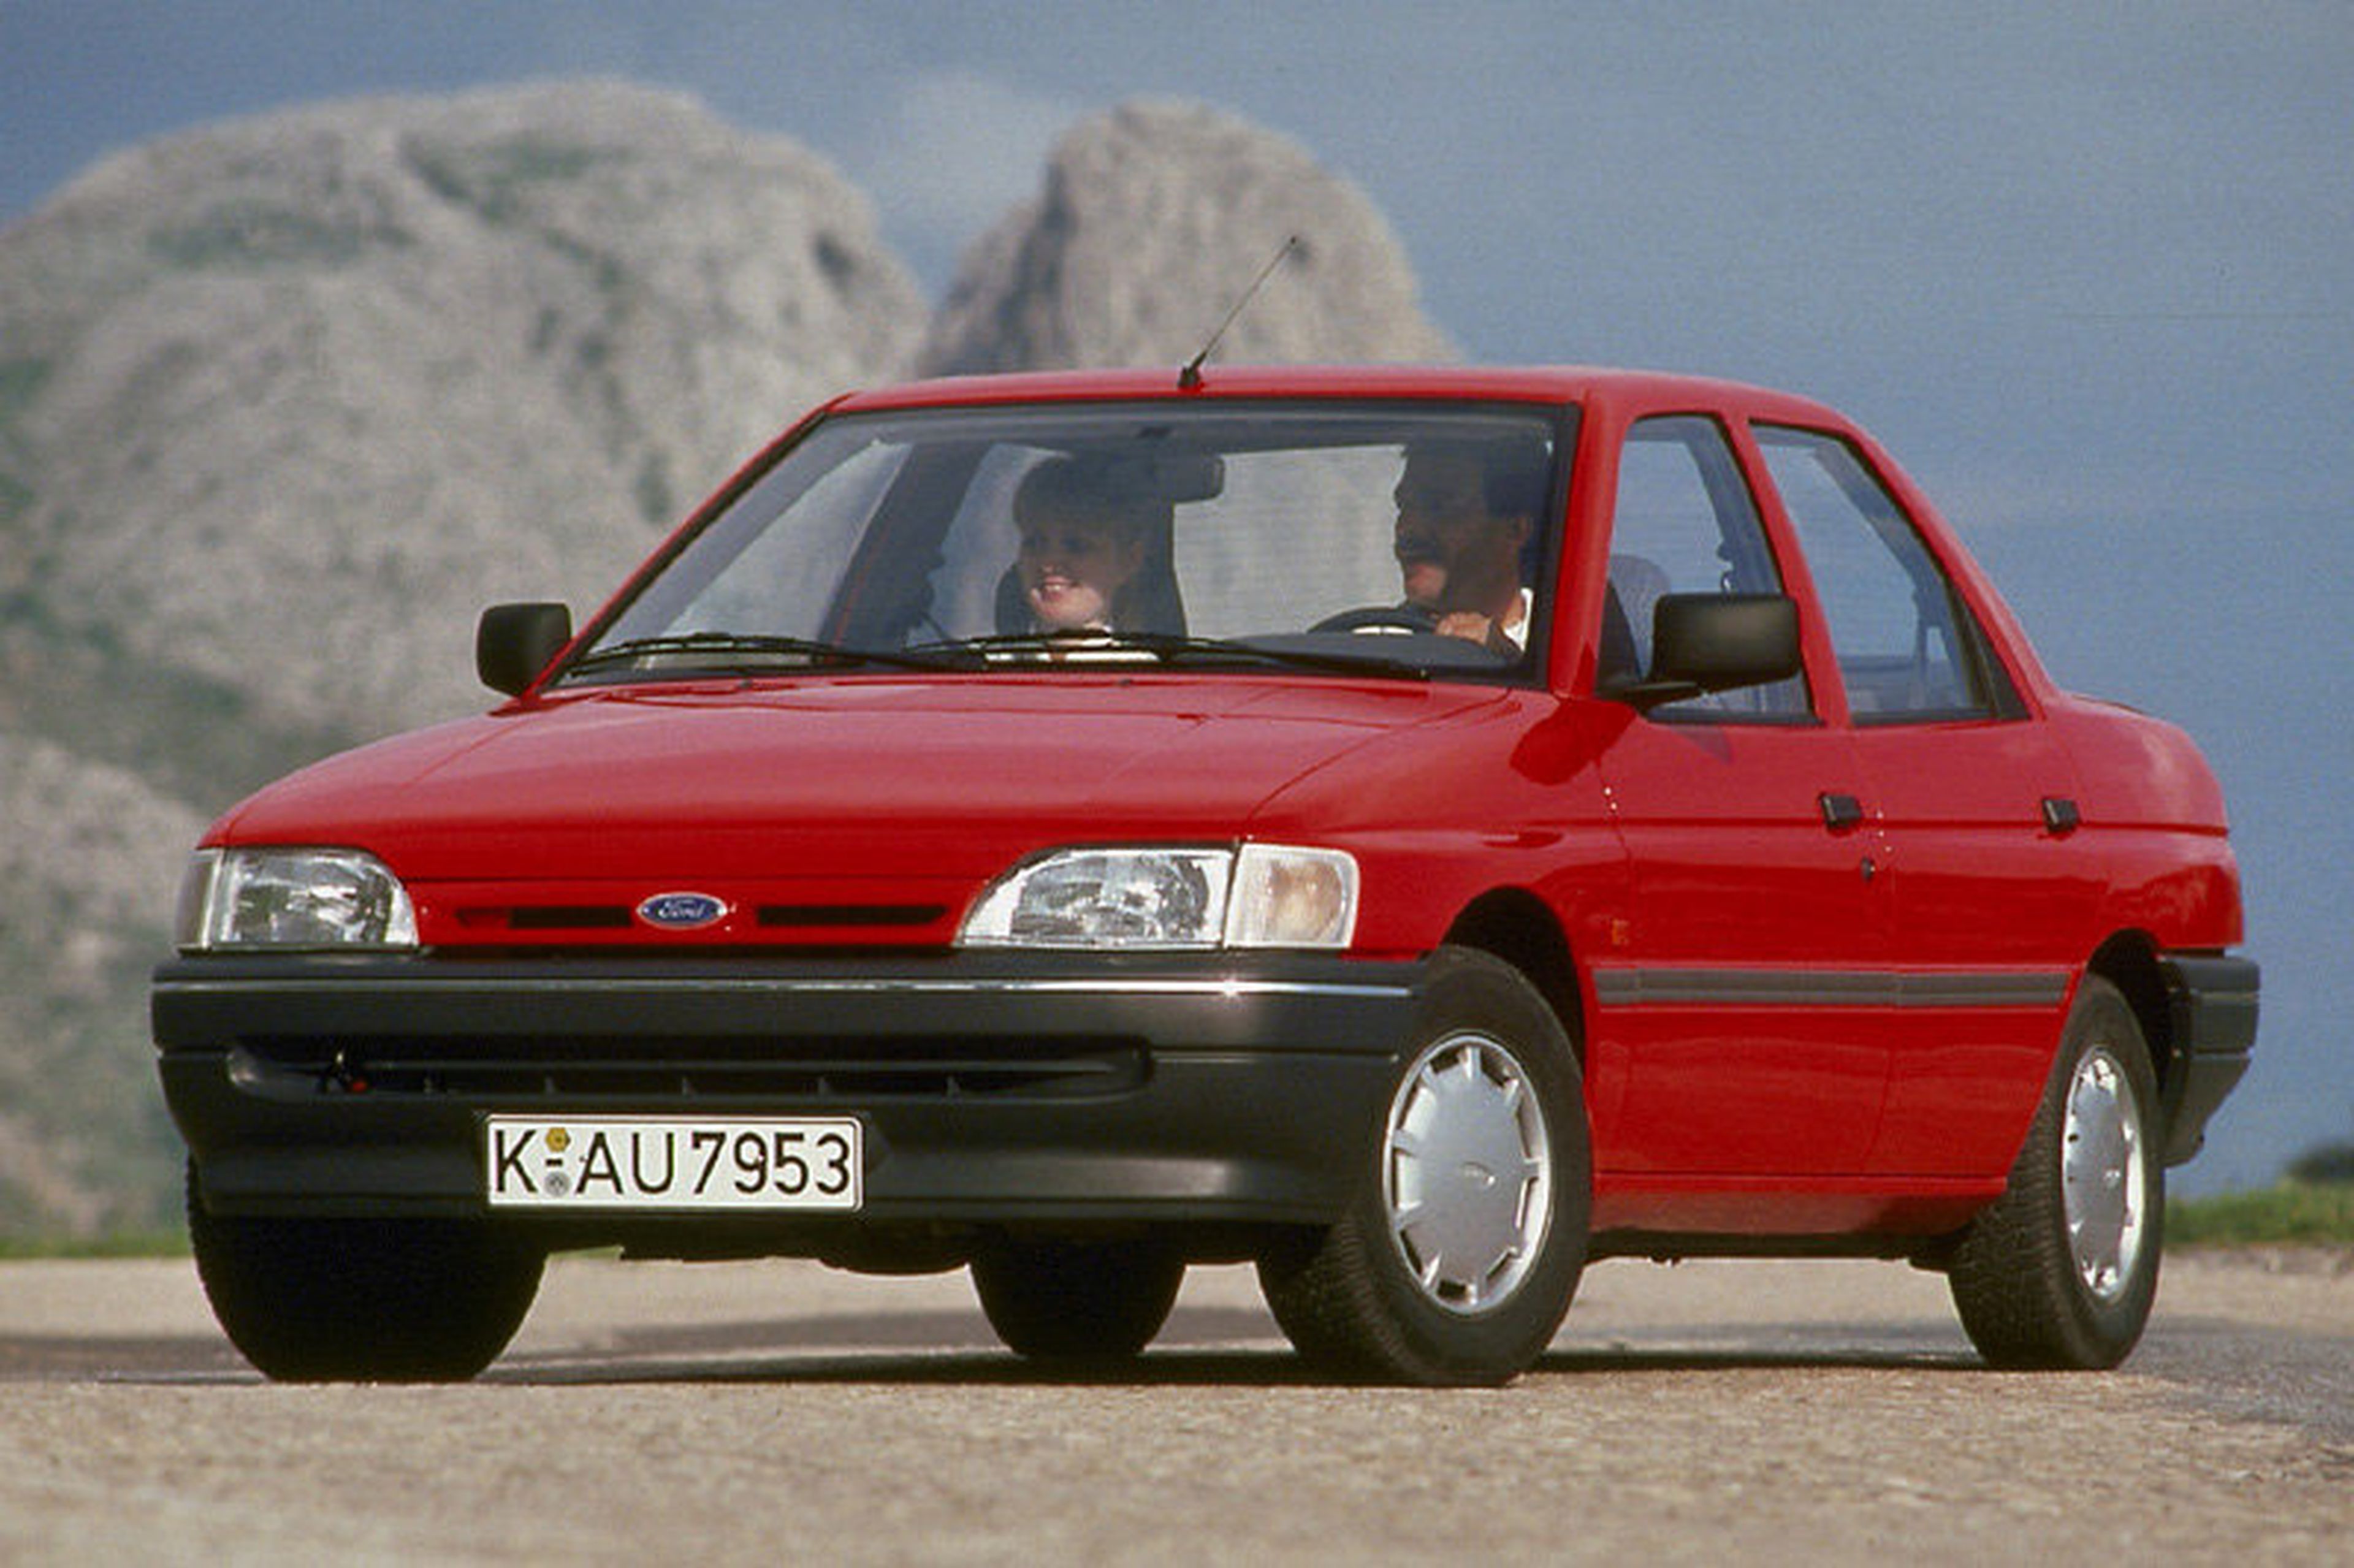 Ford Orion u Opel Kadett sedán